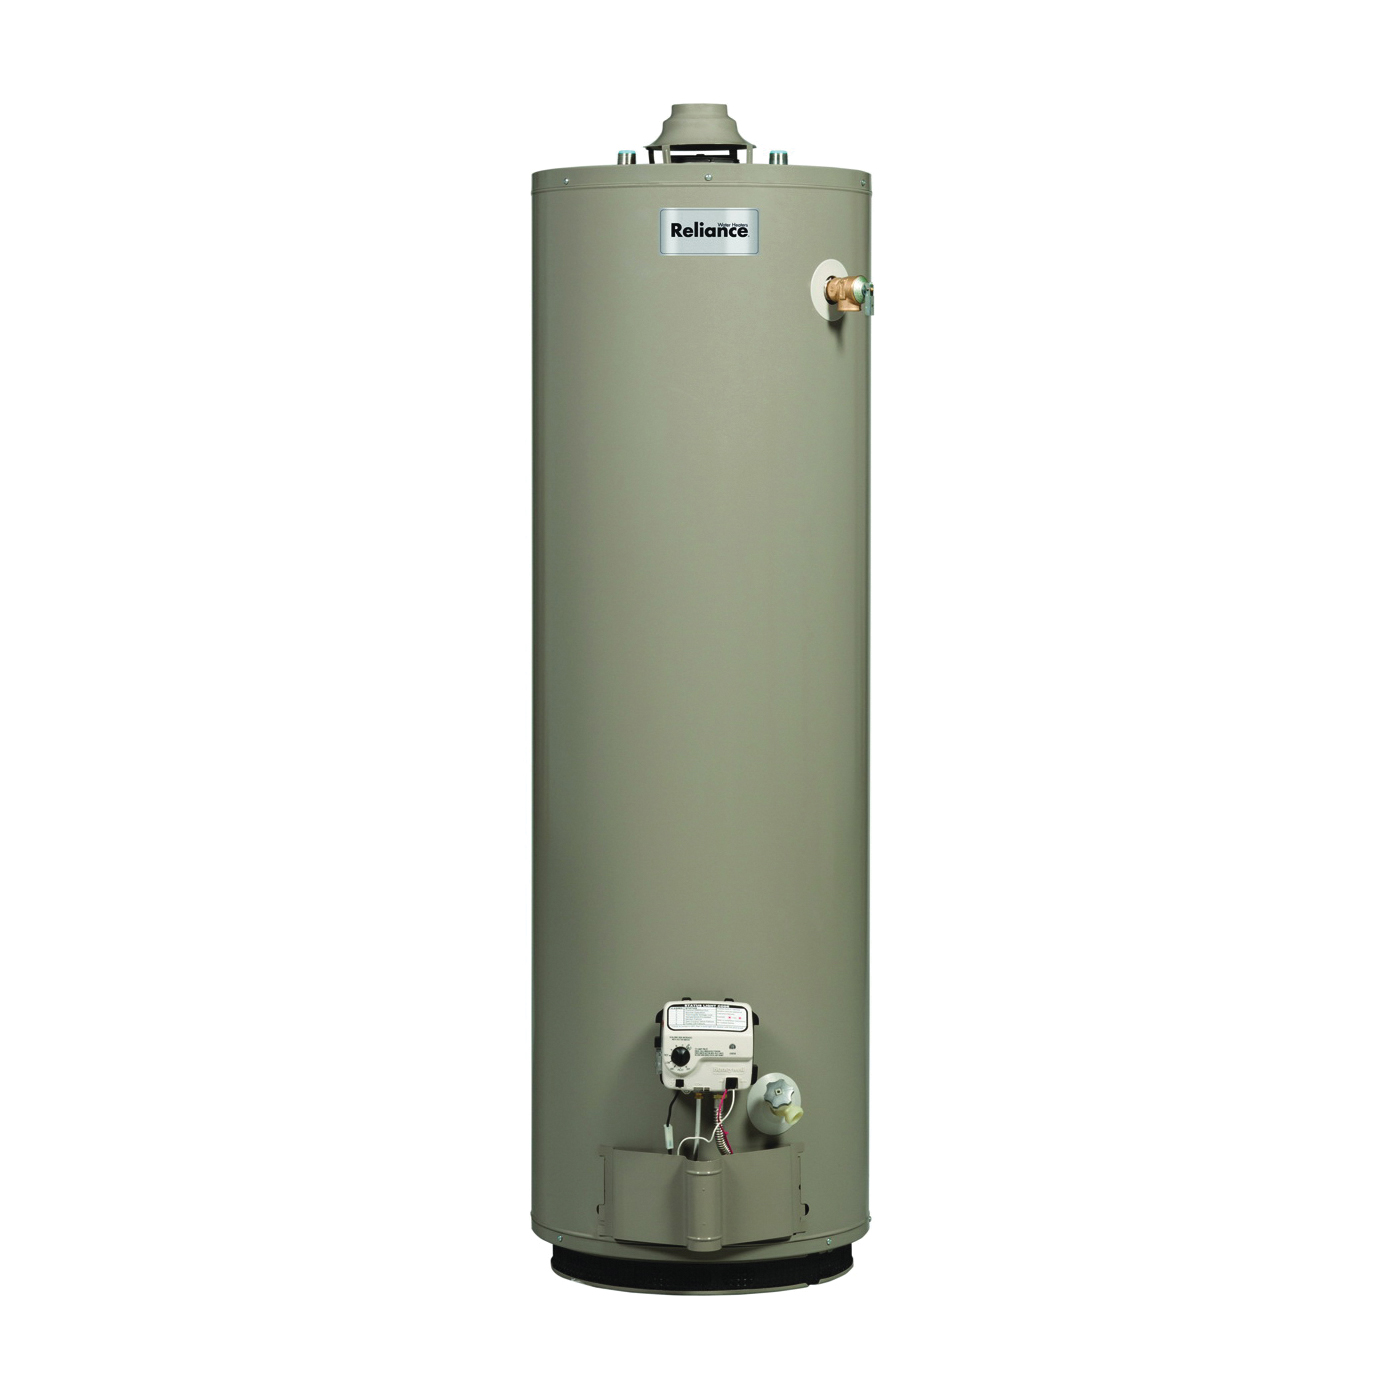 Reliance 6 50 NBRT Gas Water Heater, Natural Gas, 50 gal Tank, 81 gph, 40000 Btu BTU, 0.62 Energy Efficiency